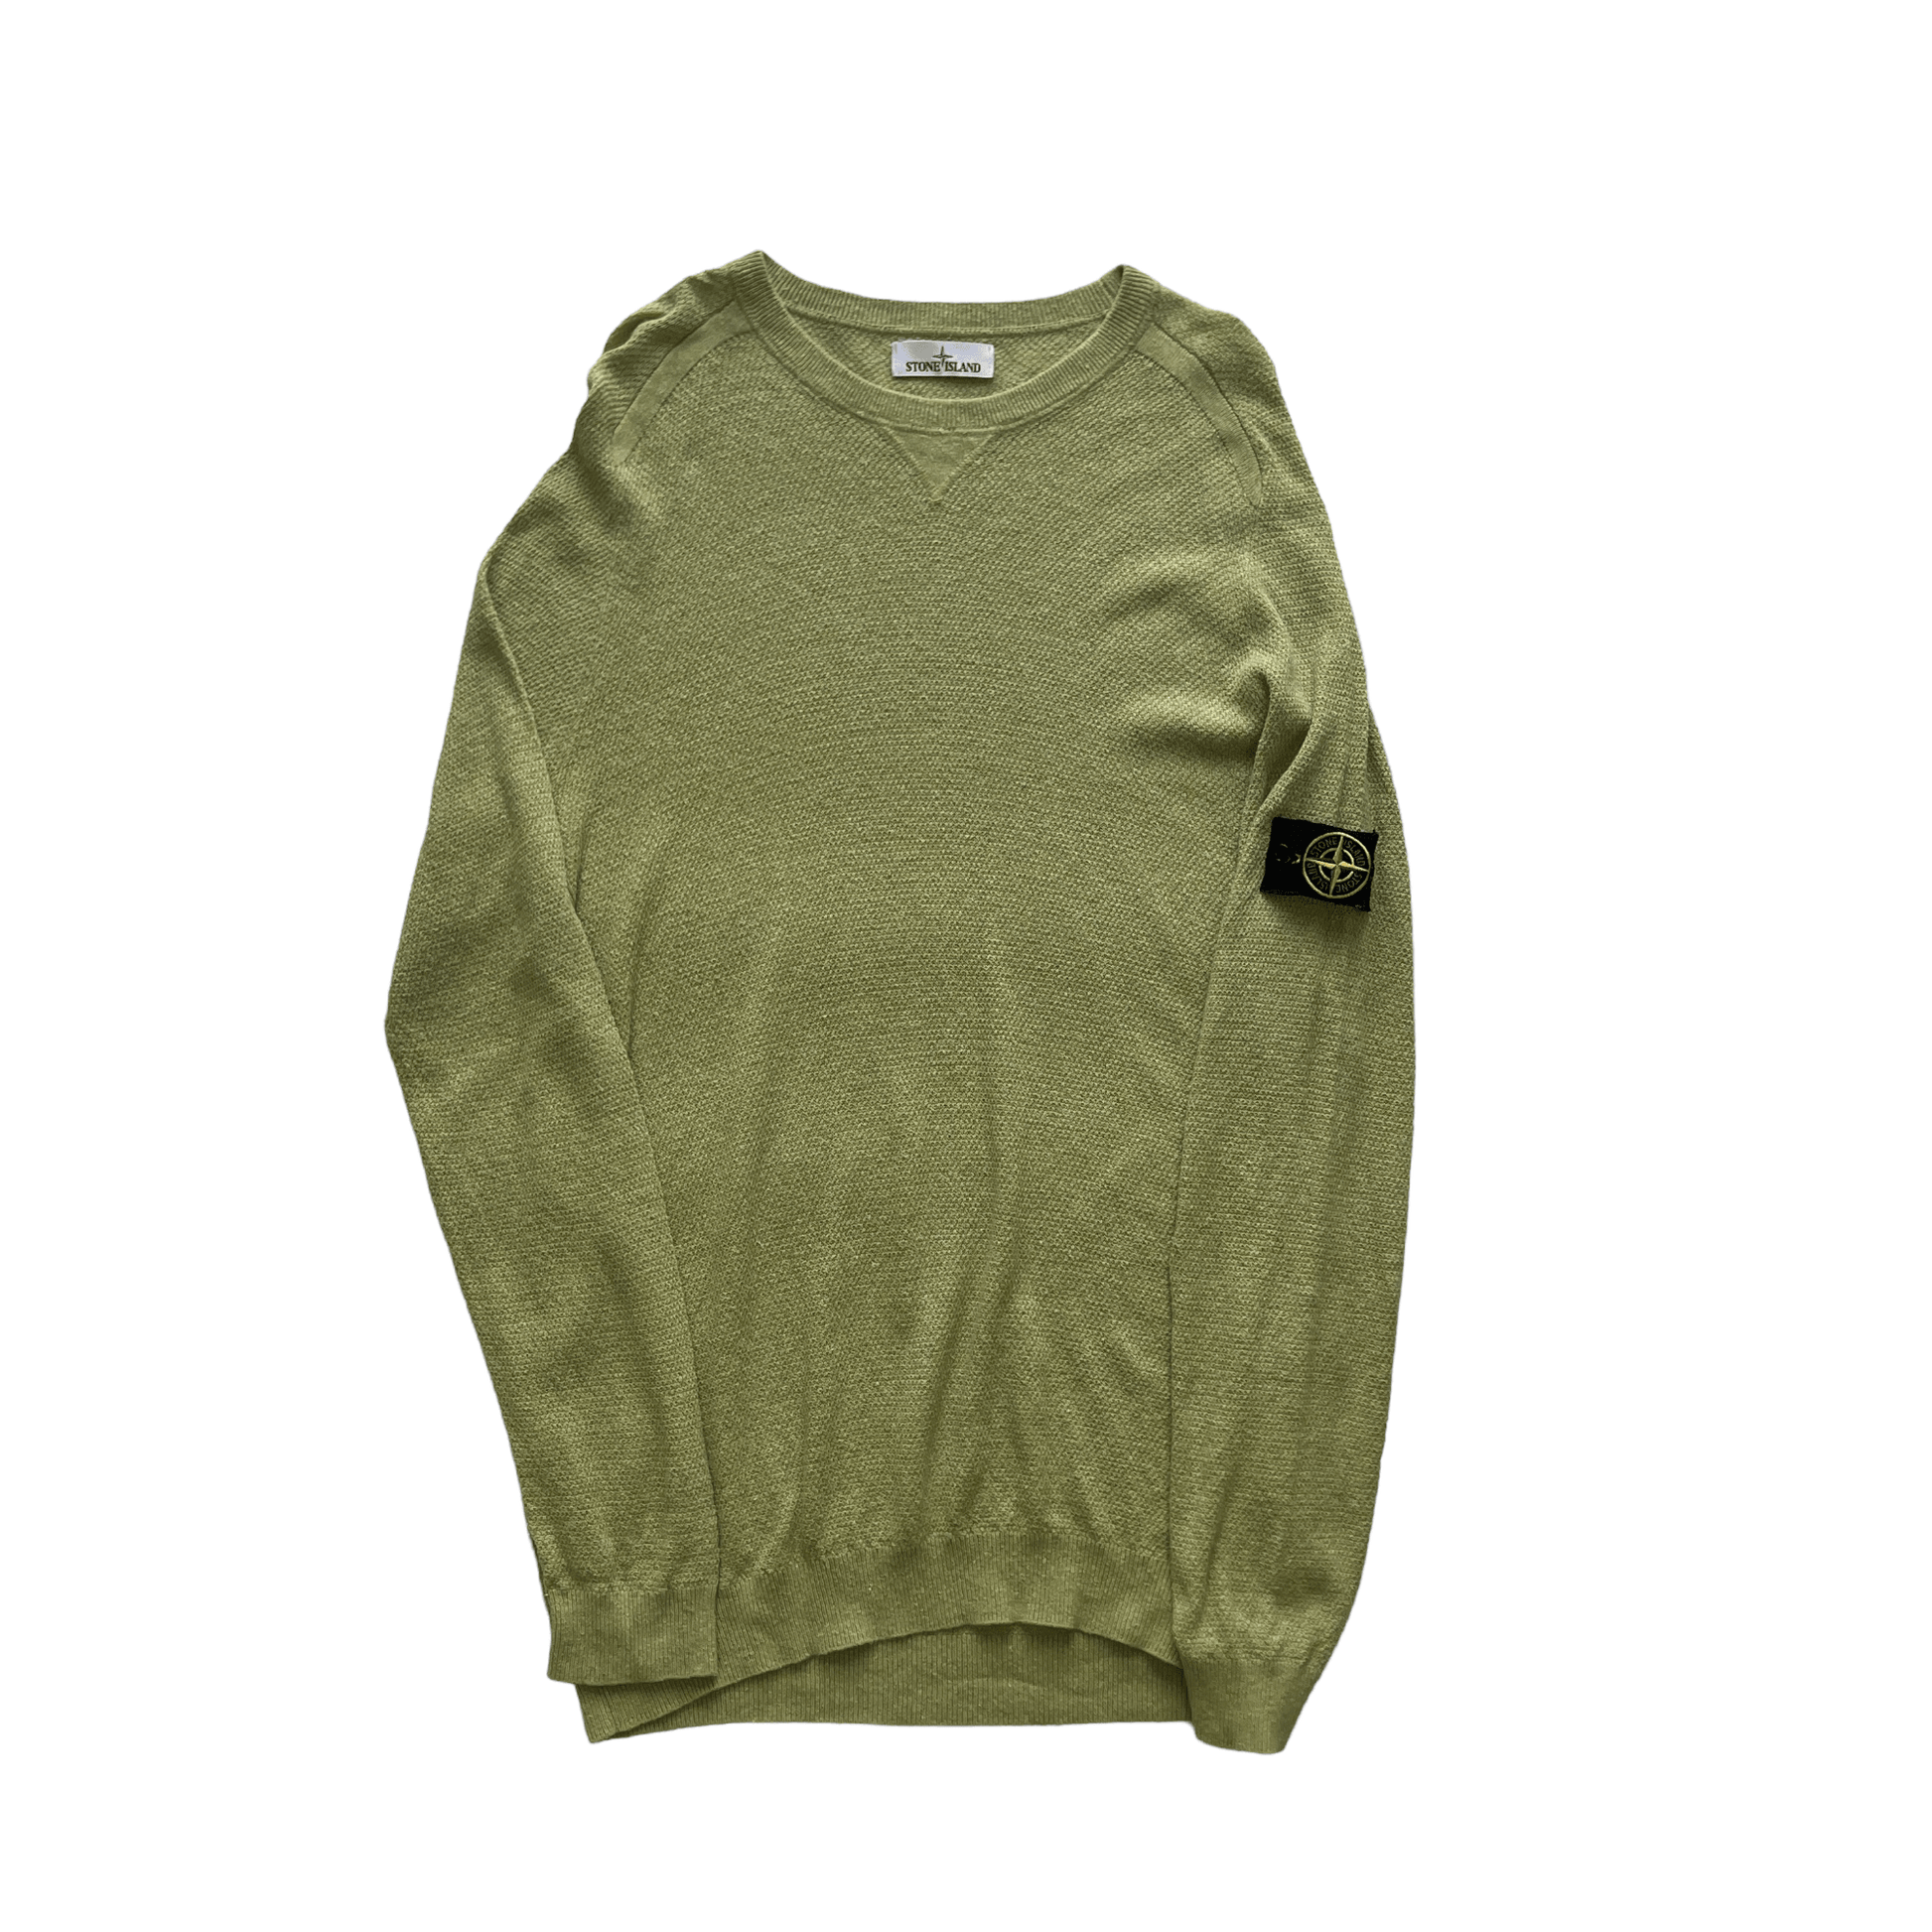 Vintage Green Stone Island Sweatshirt - Extra Large - The Streetwear Studio